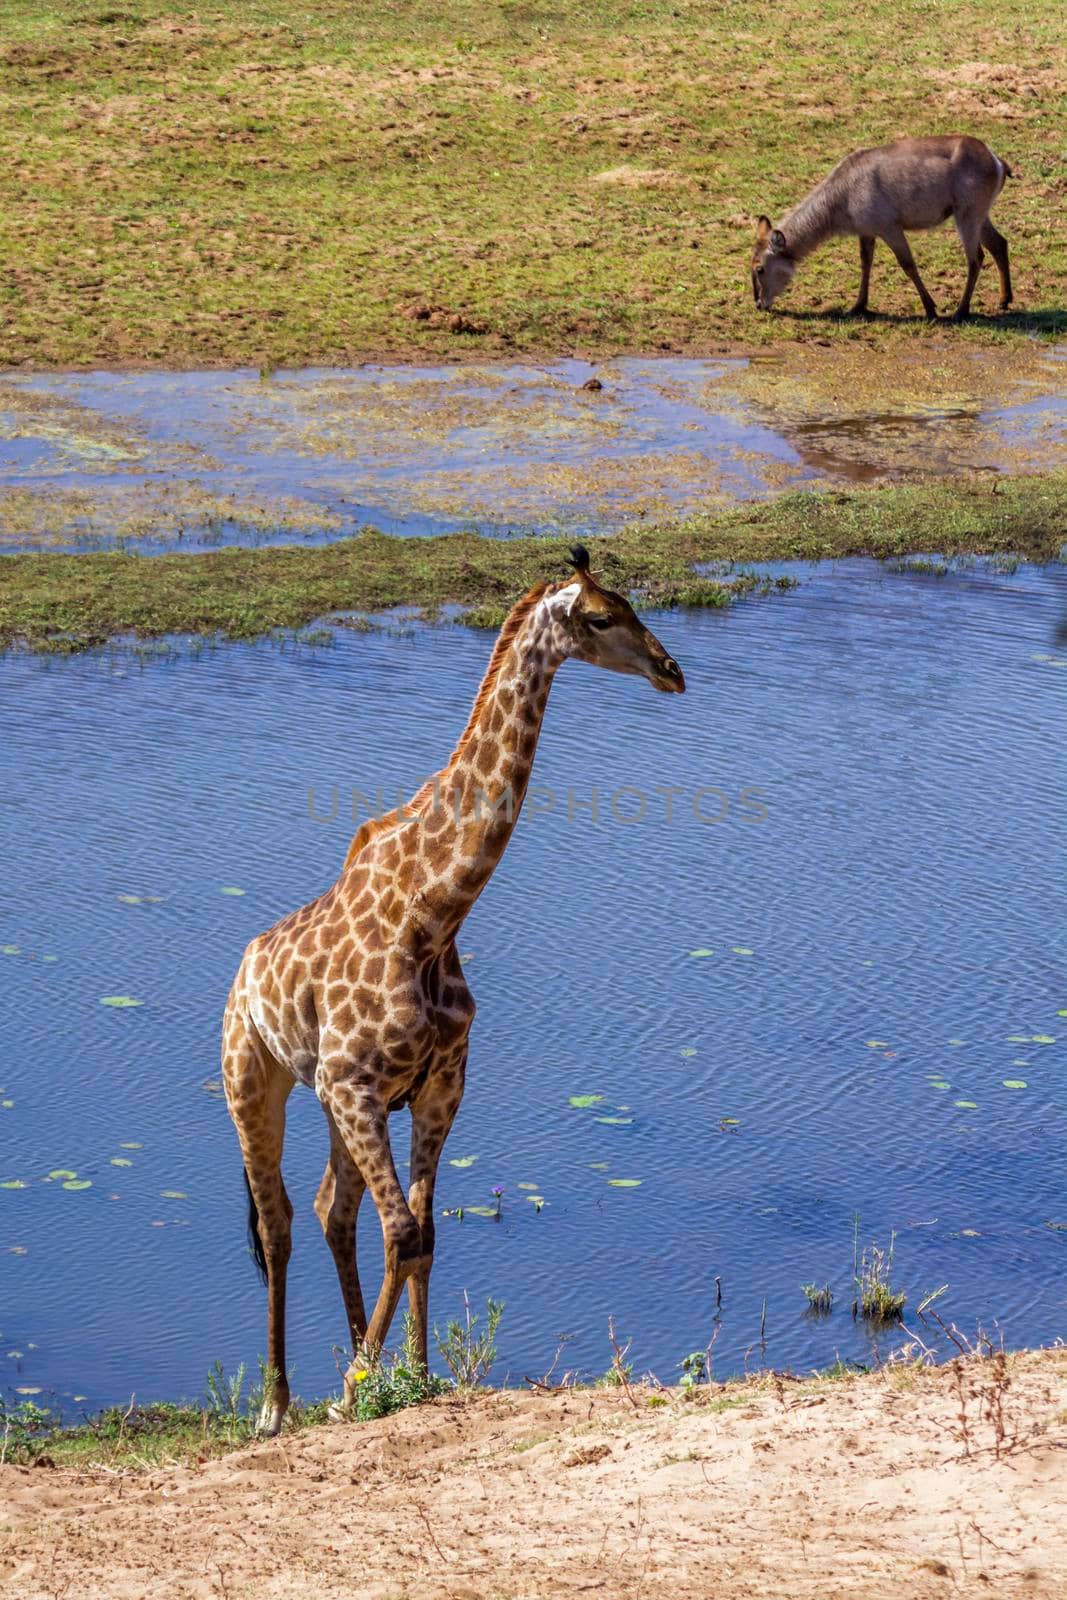 Specie Giraffa camelopardalis family of 